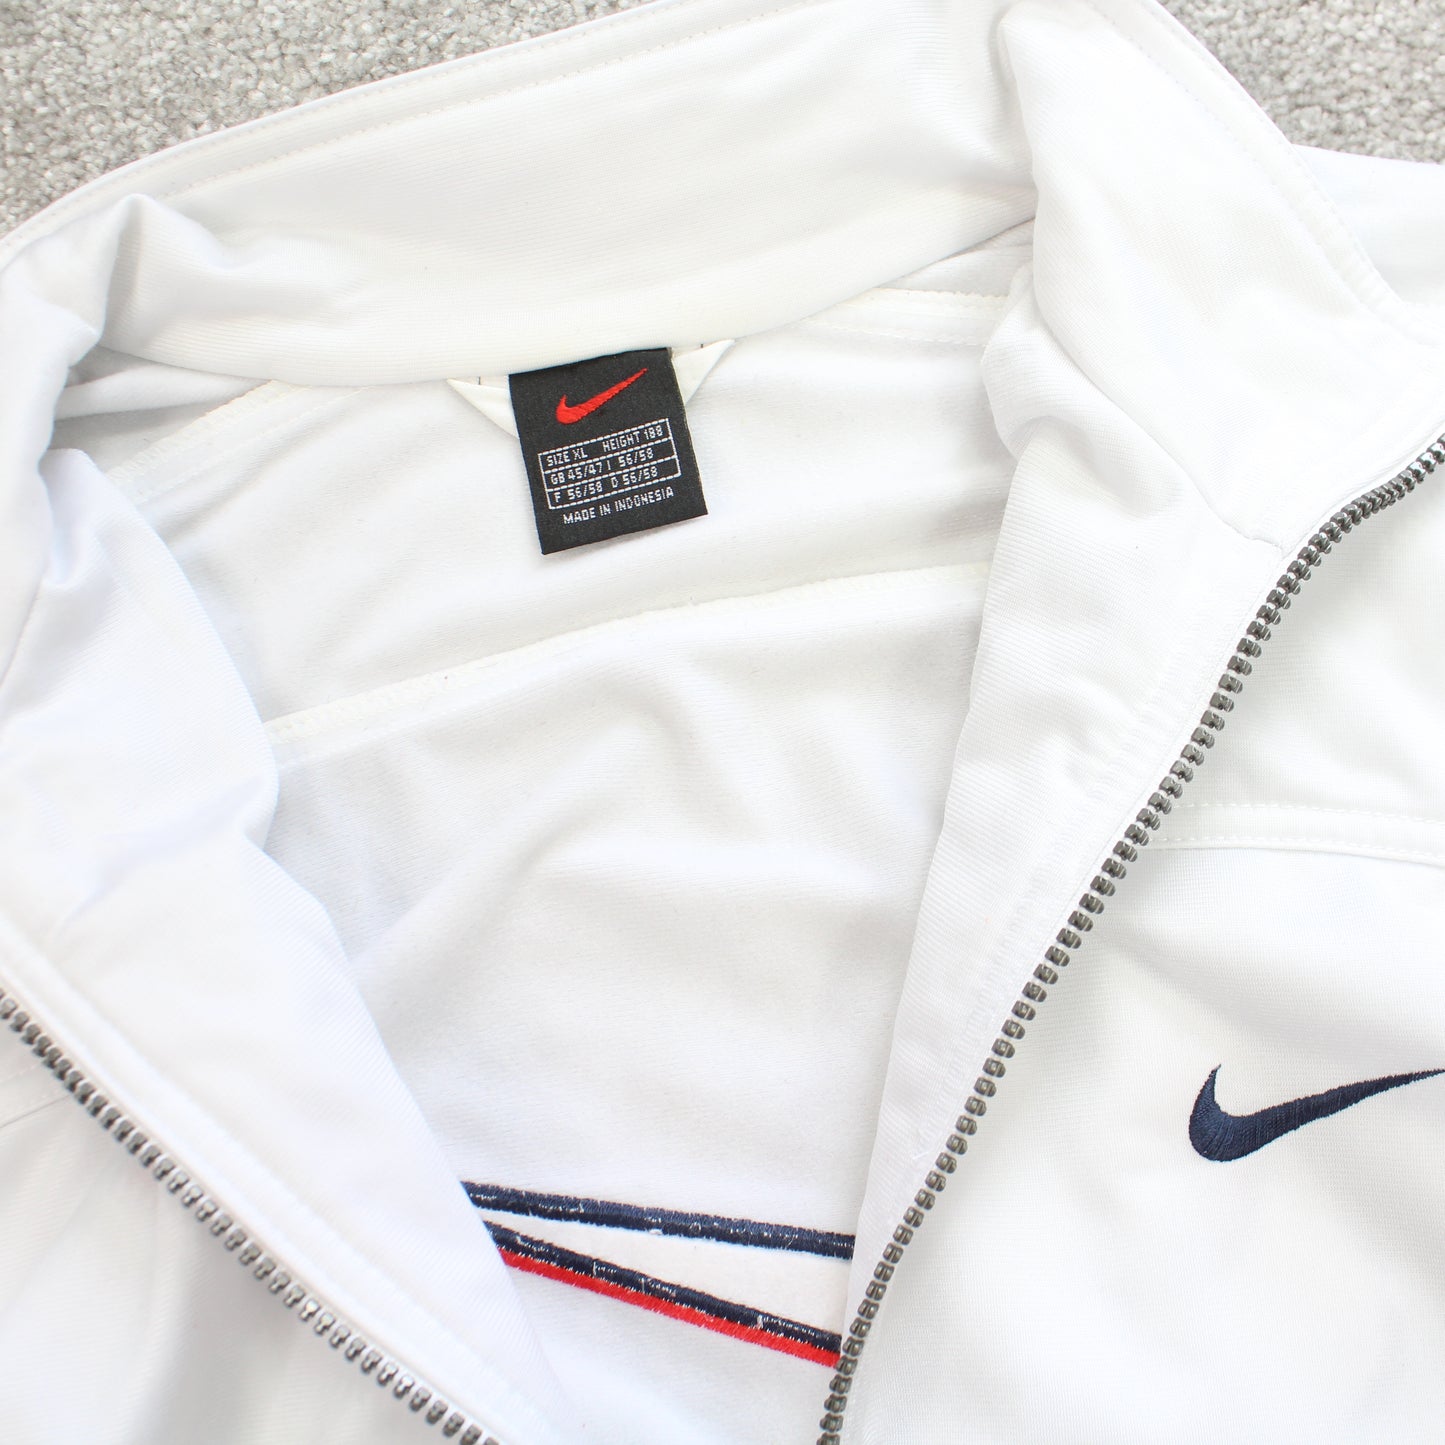 RARE Vintage 1990s Nike Track Jacket White - (XL)